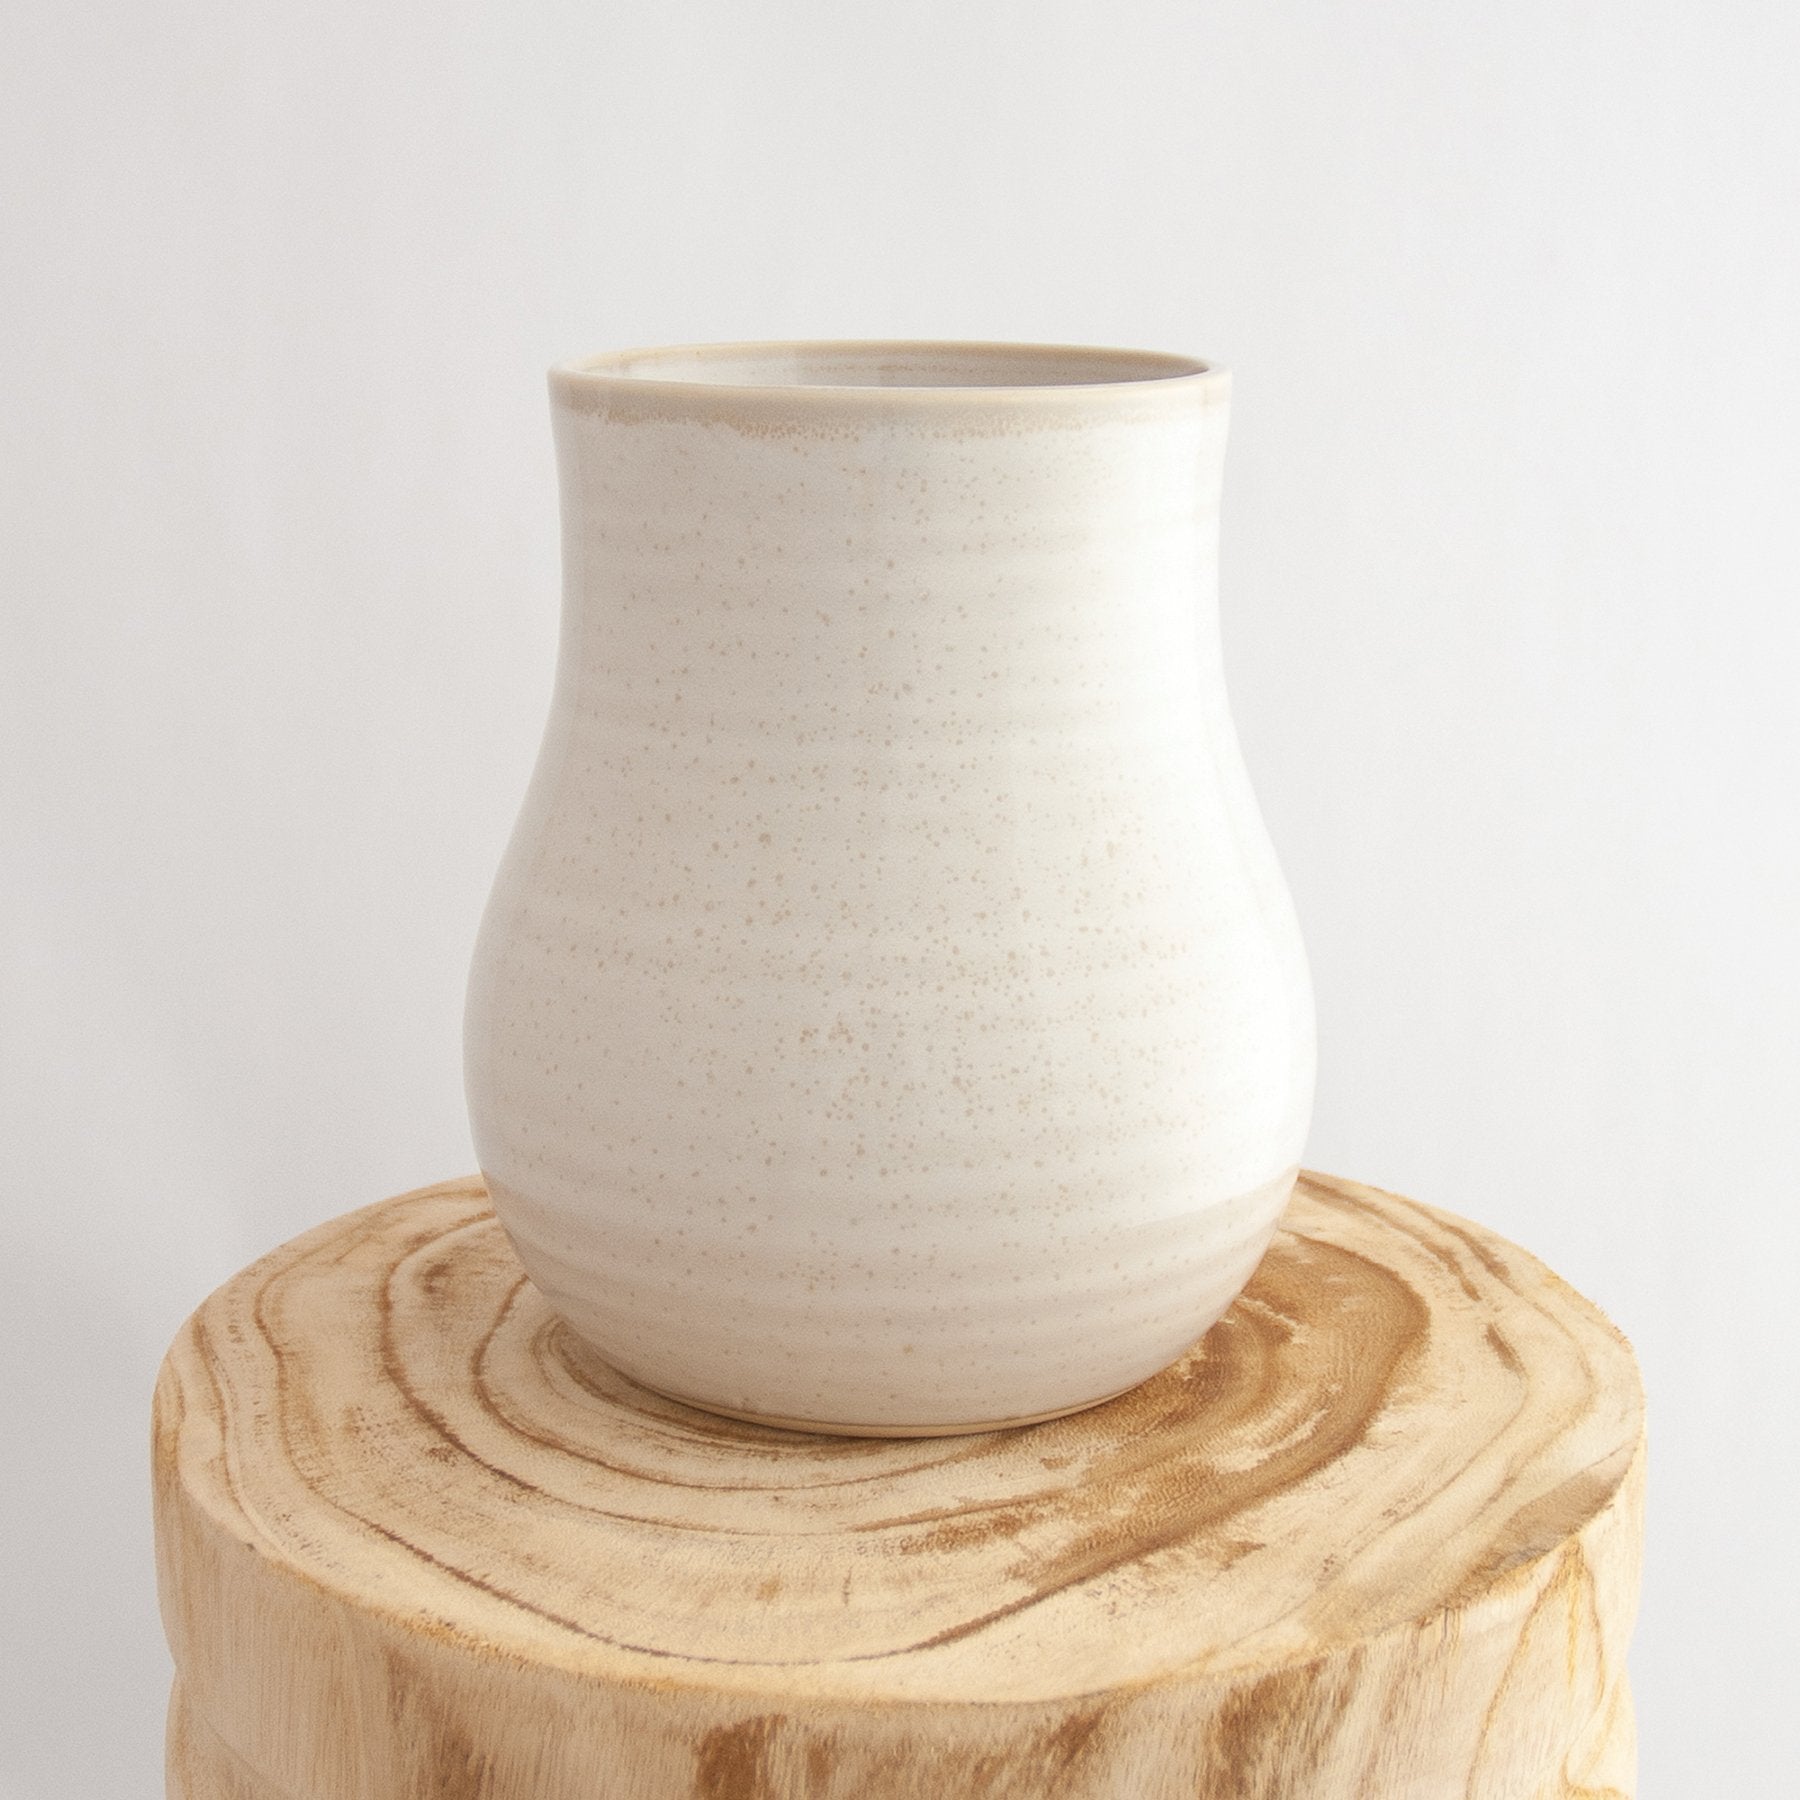 Robert Gordon pottery botanica coast white vase sitting on a natural wooden round side table